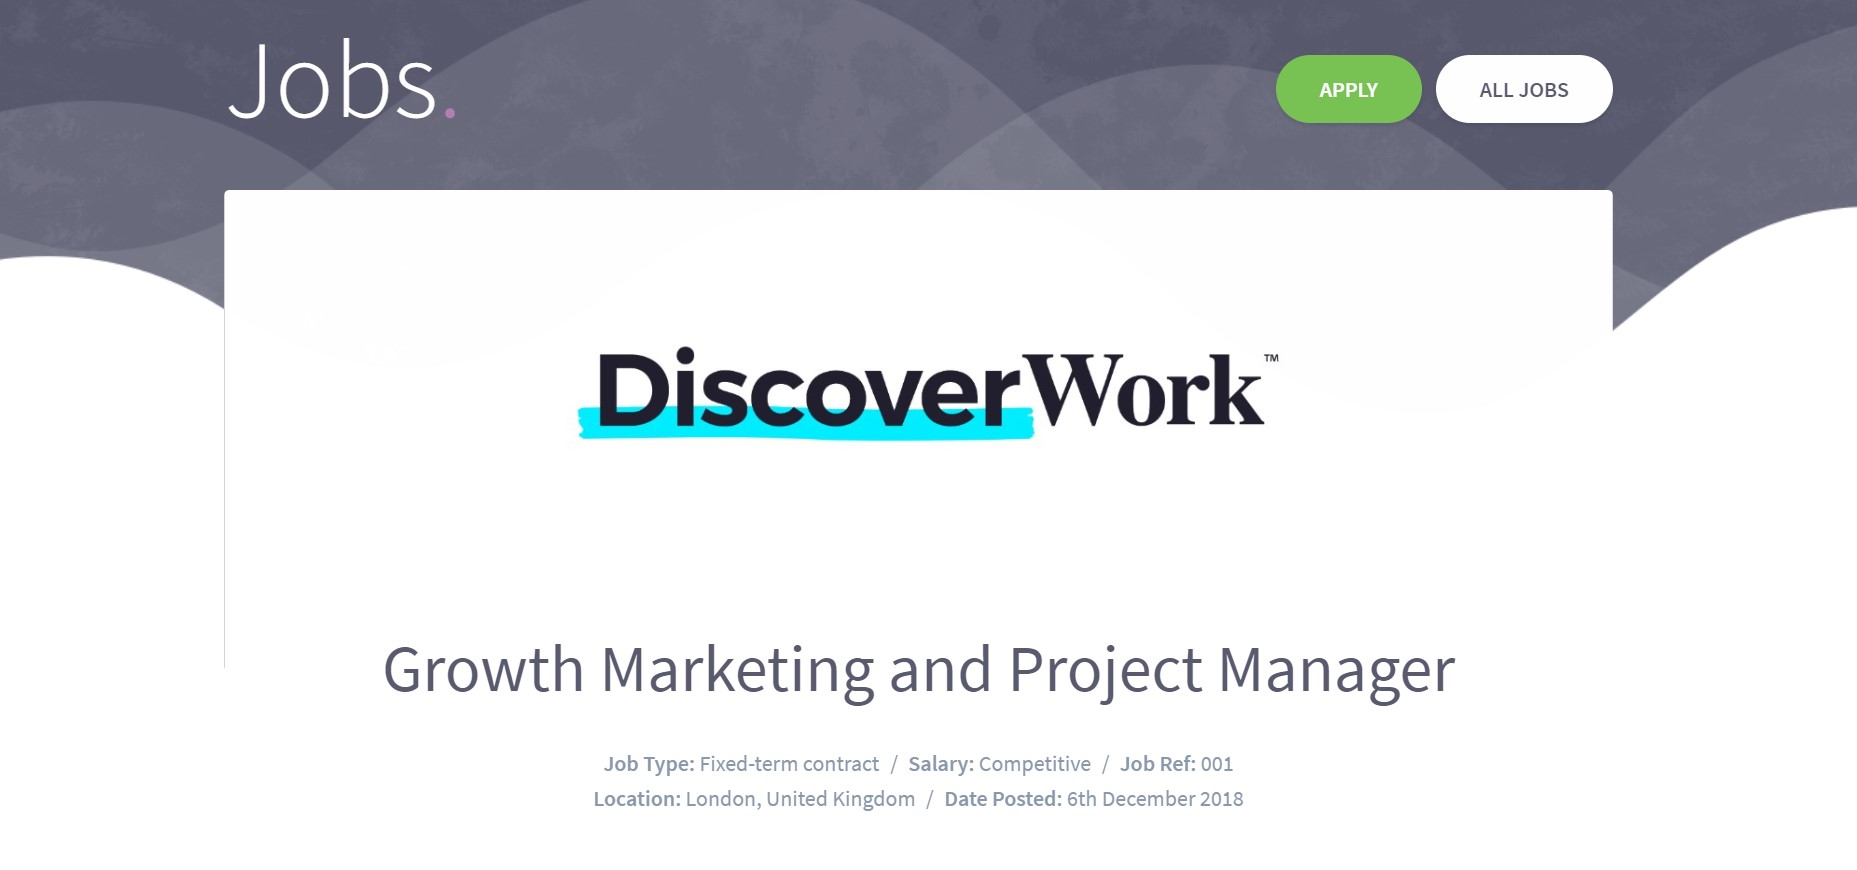 Jobs - DiscoverWork